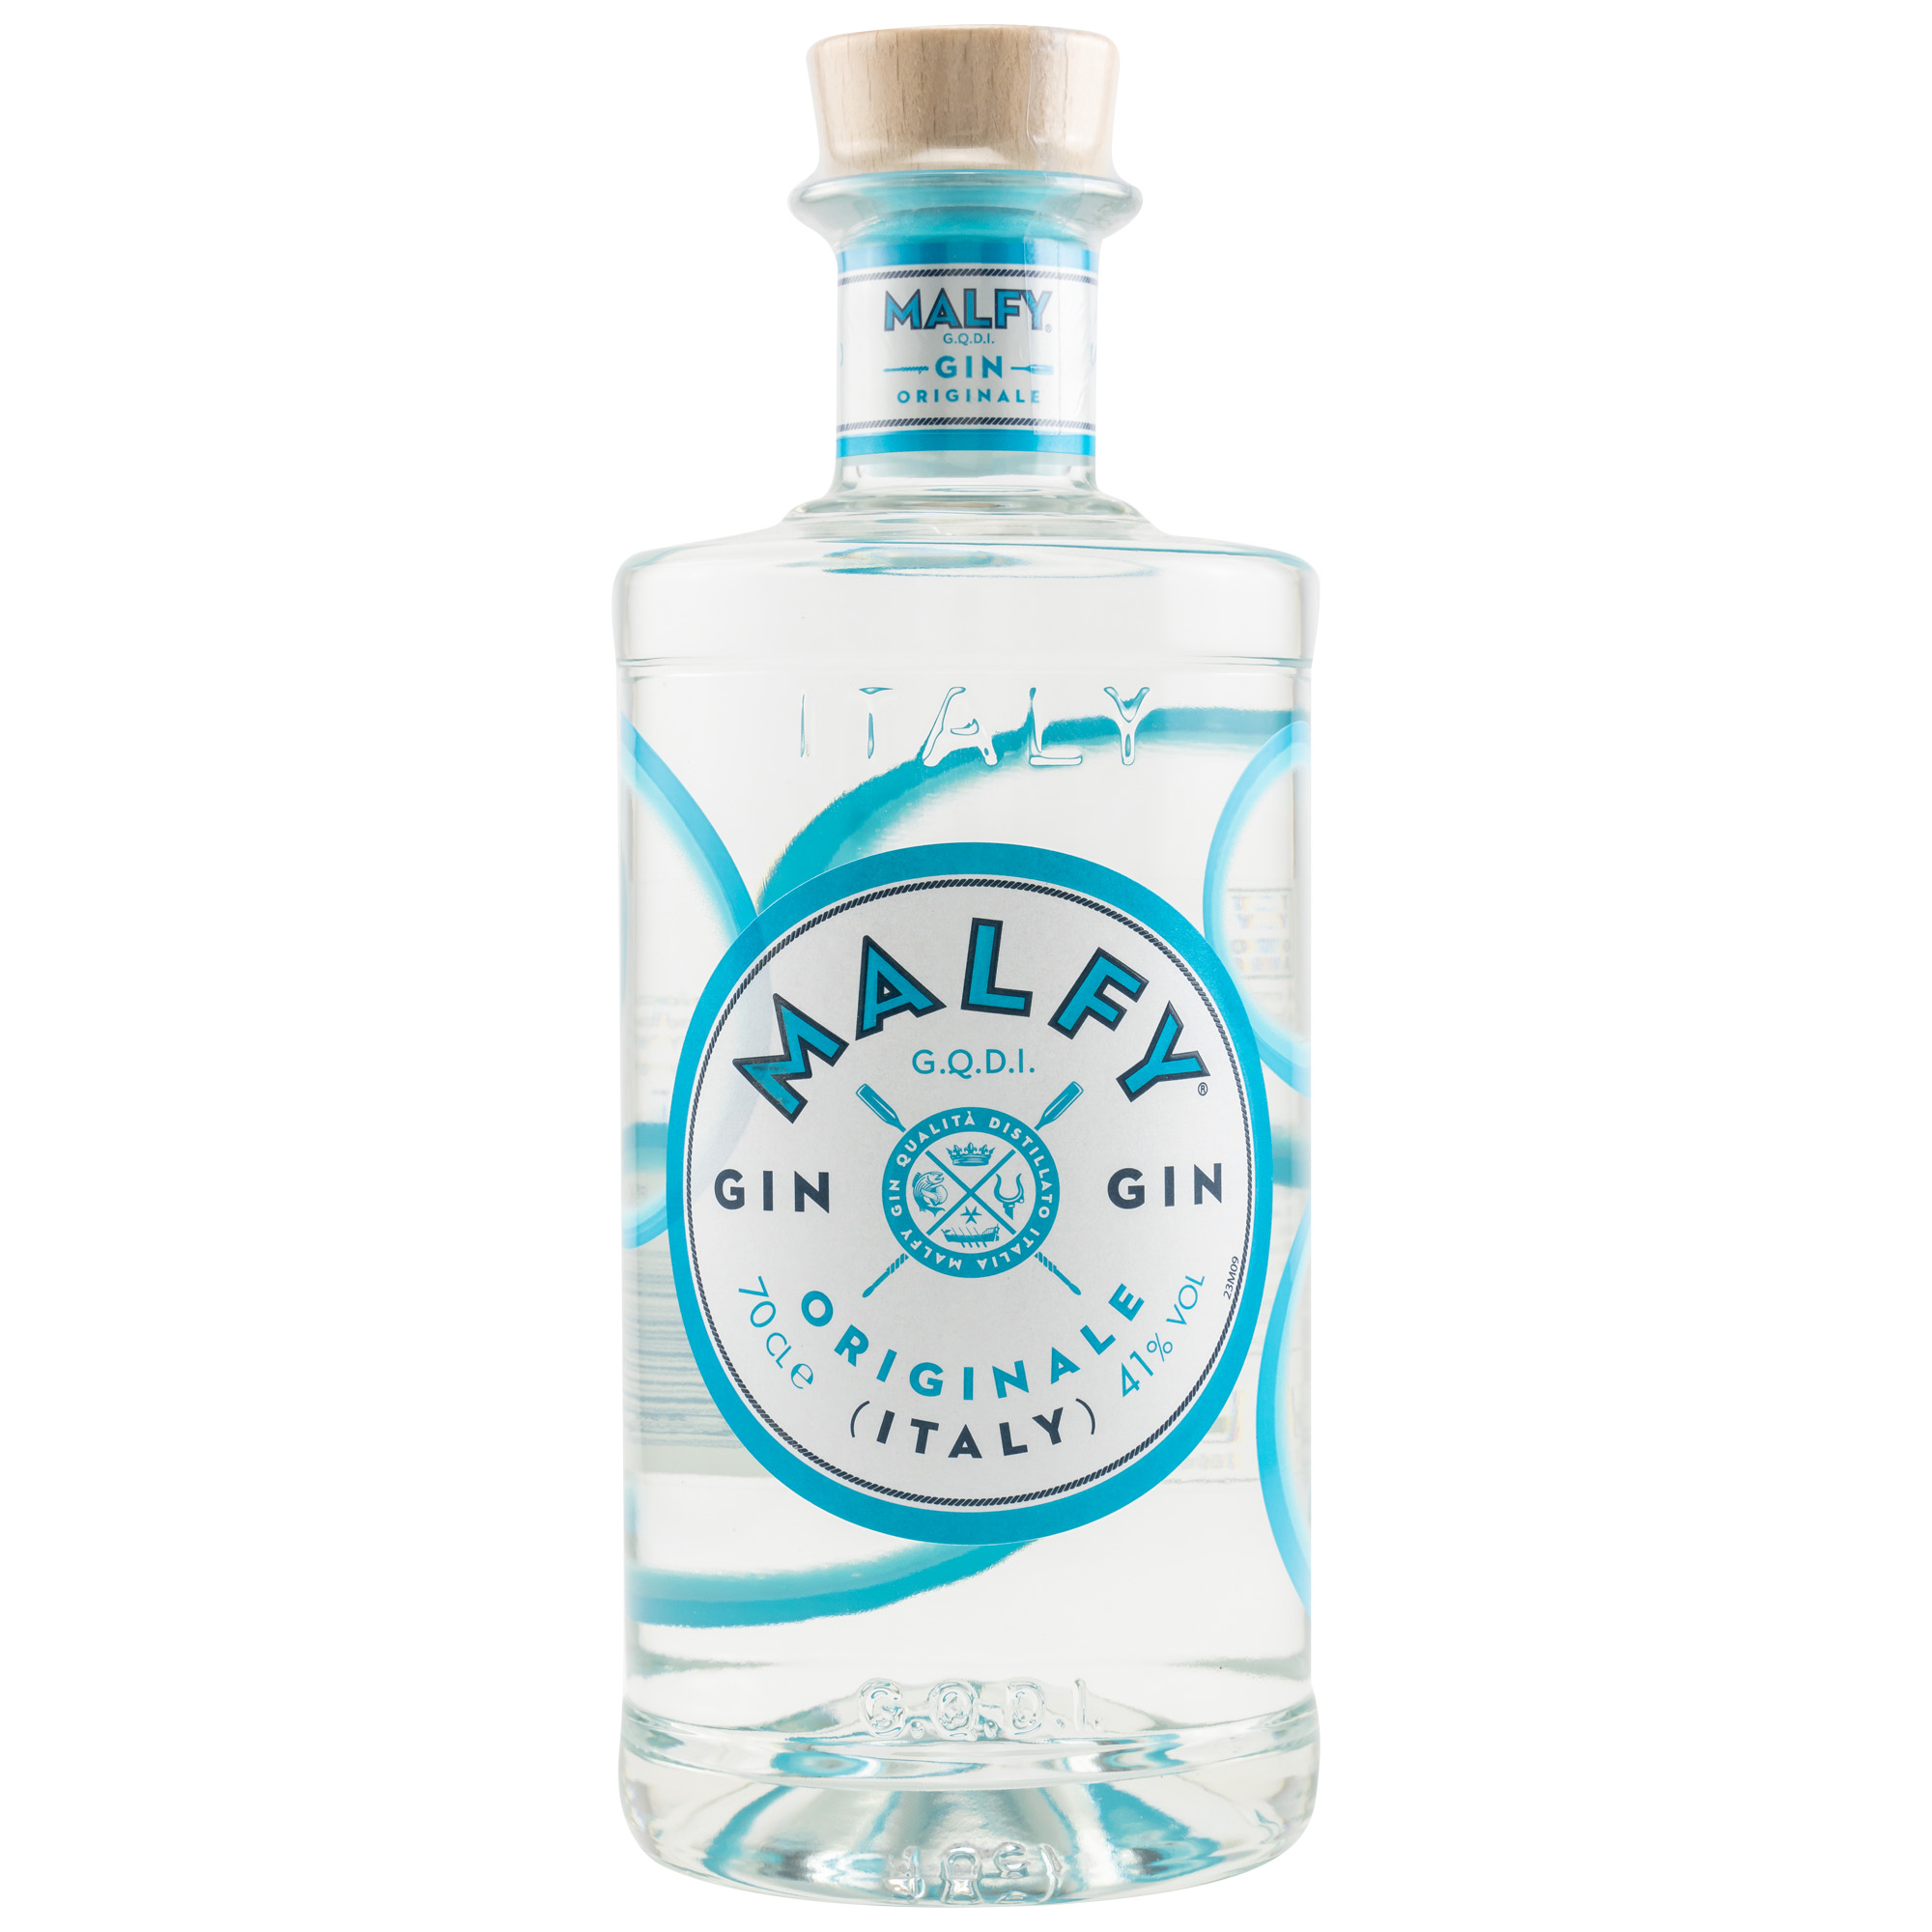 Malfy Gin Originale Italy 41%